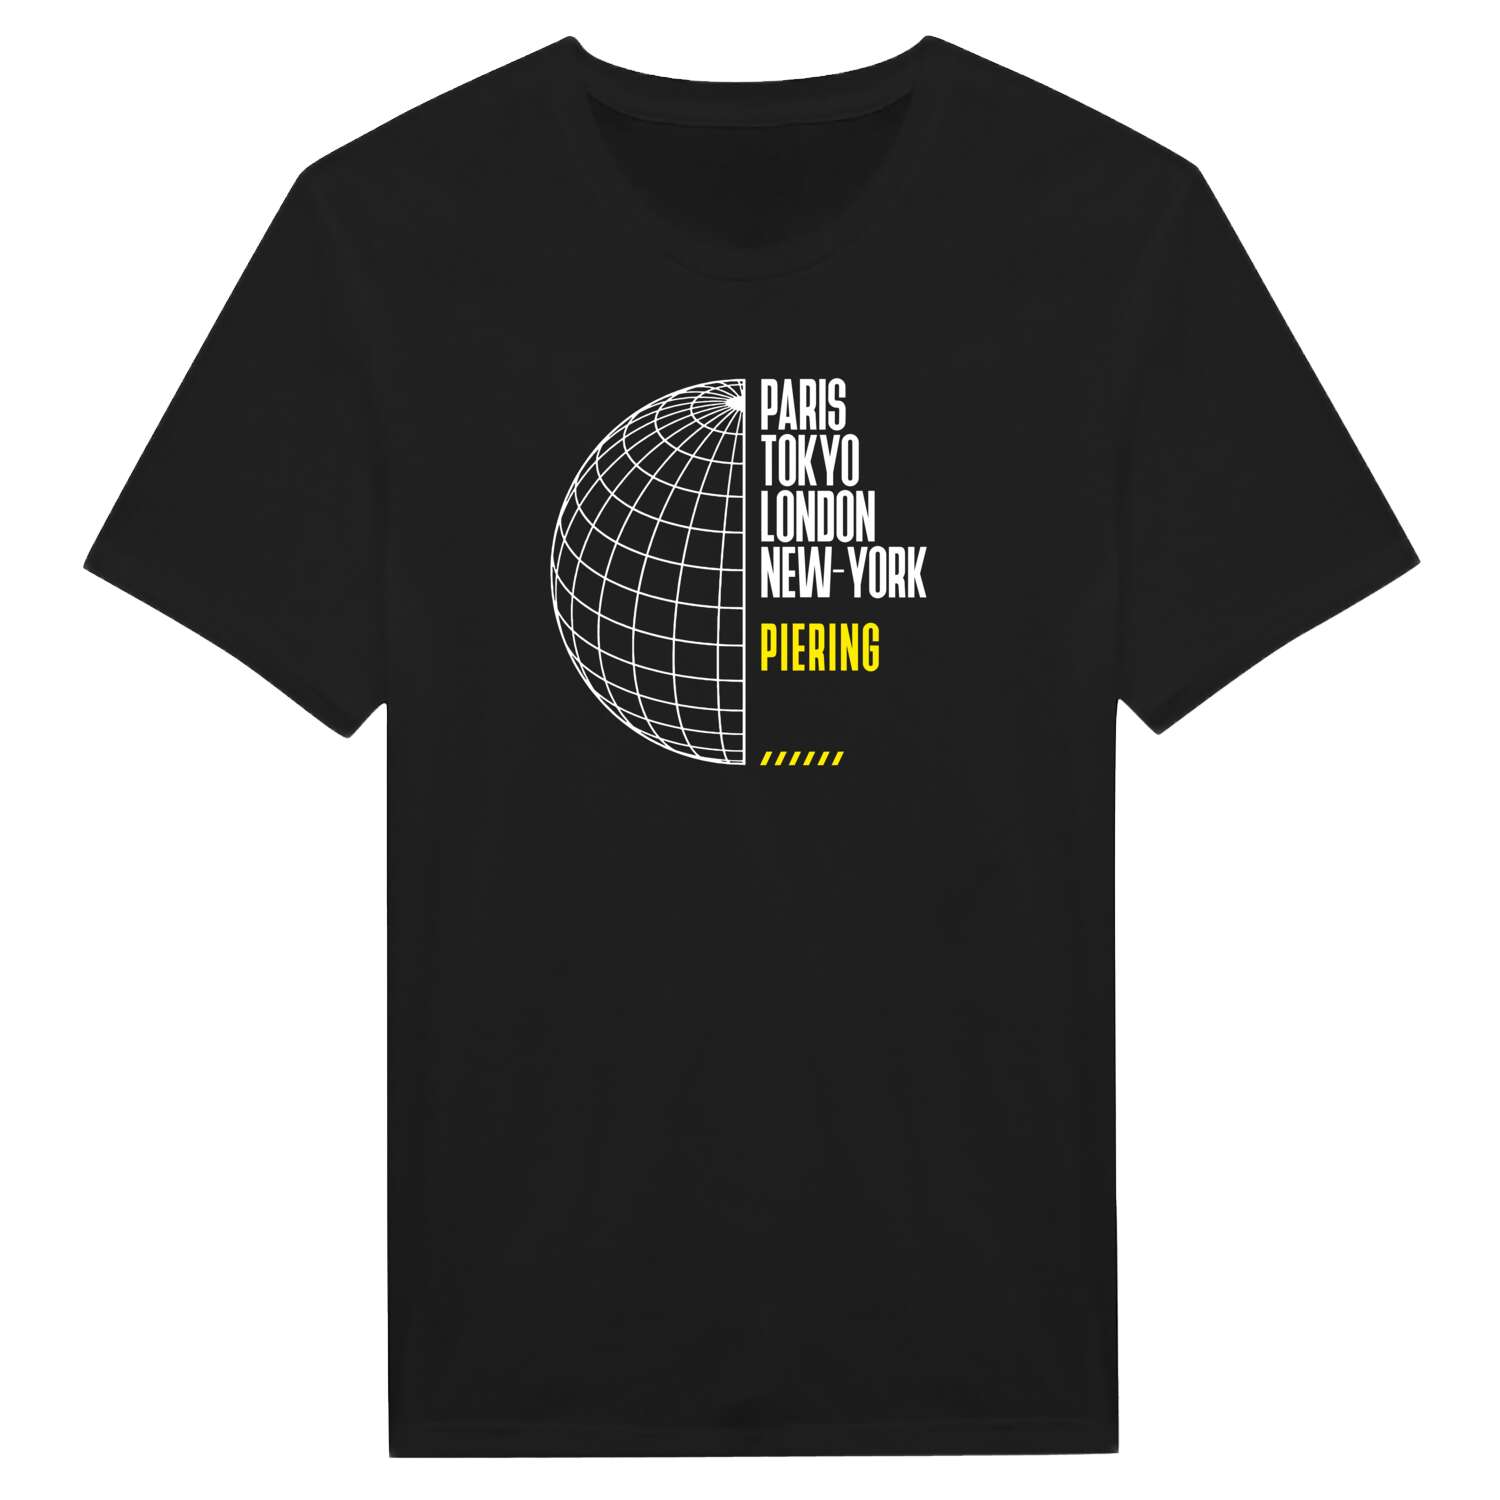 Piering T-Shirt »Paris Tokyo London«